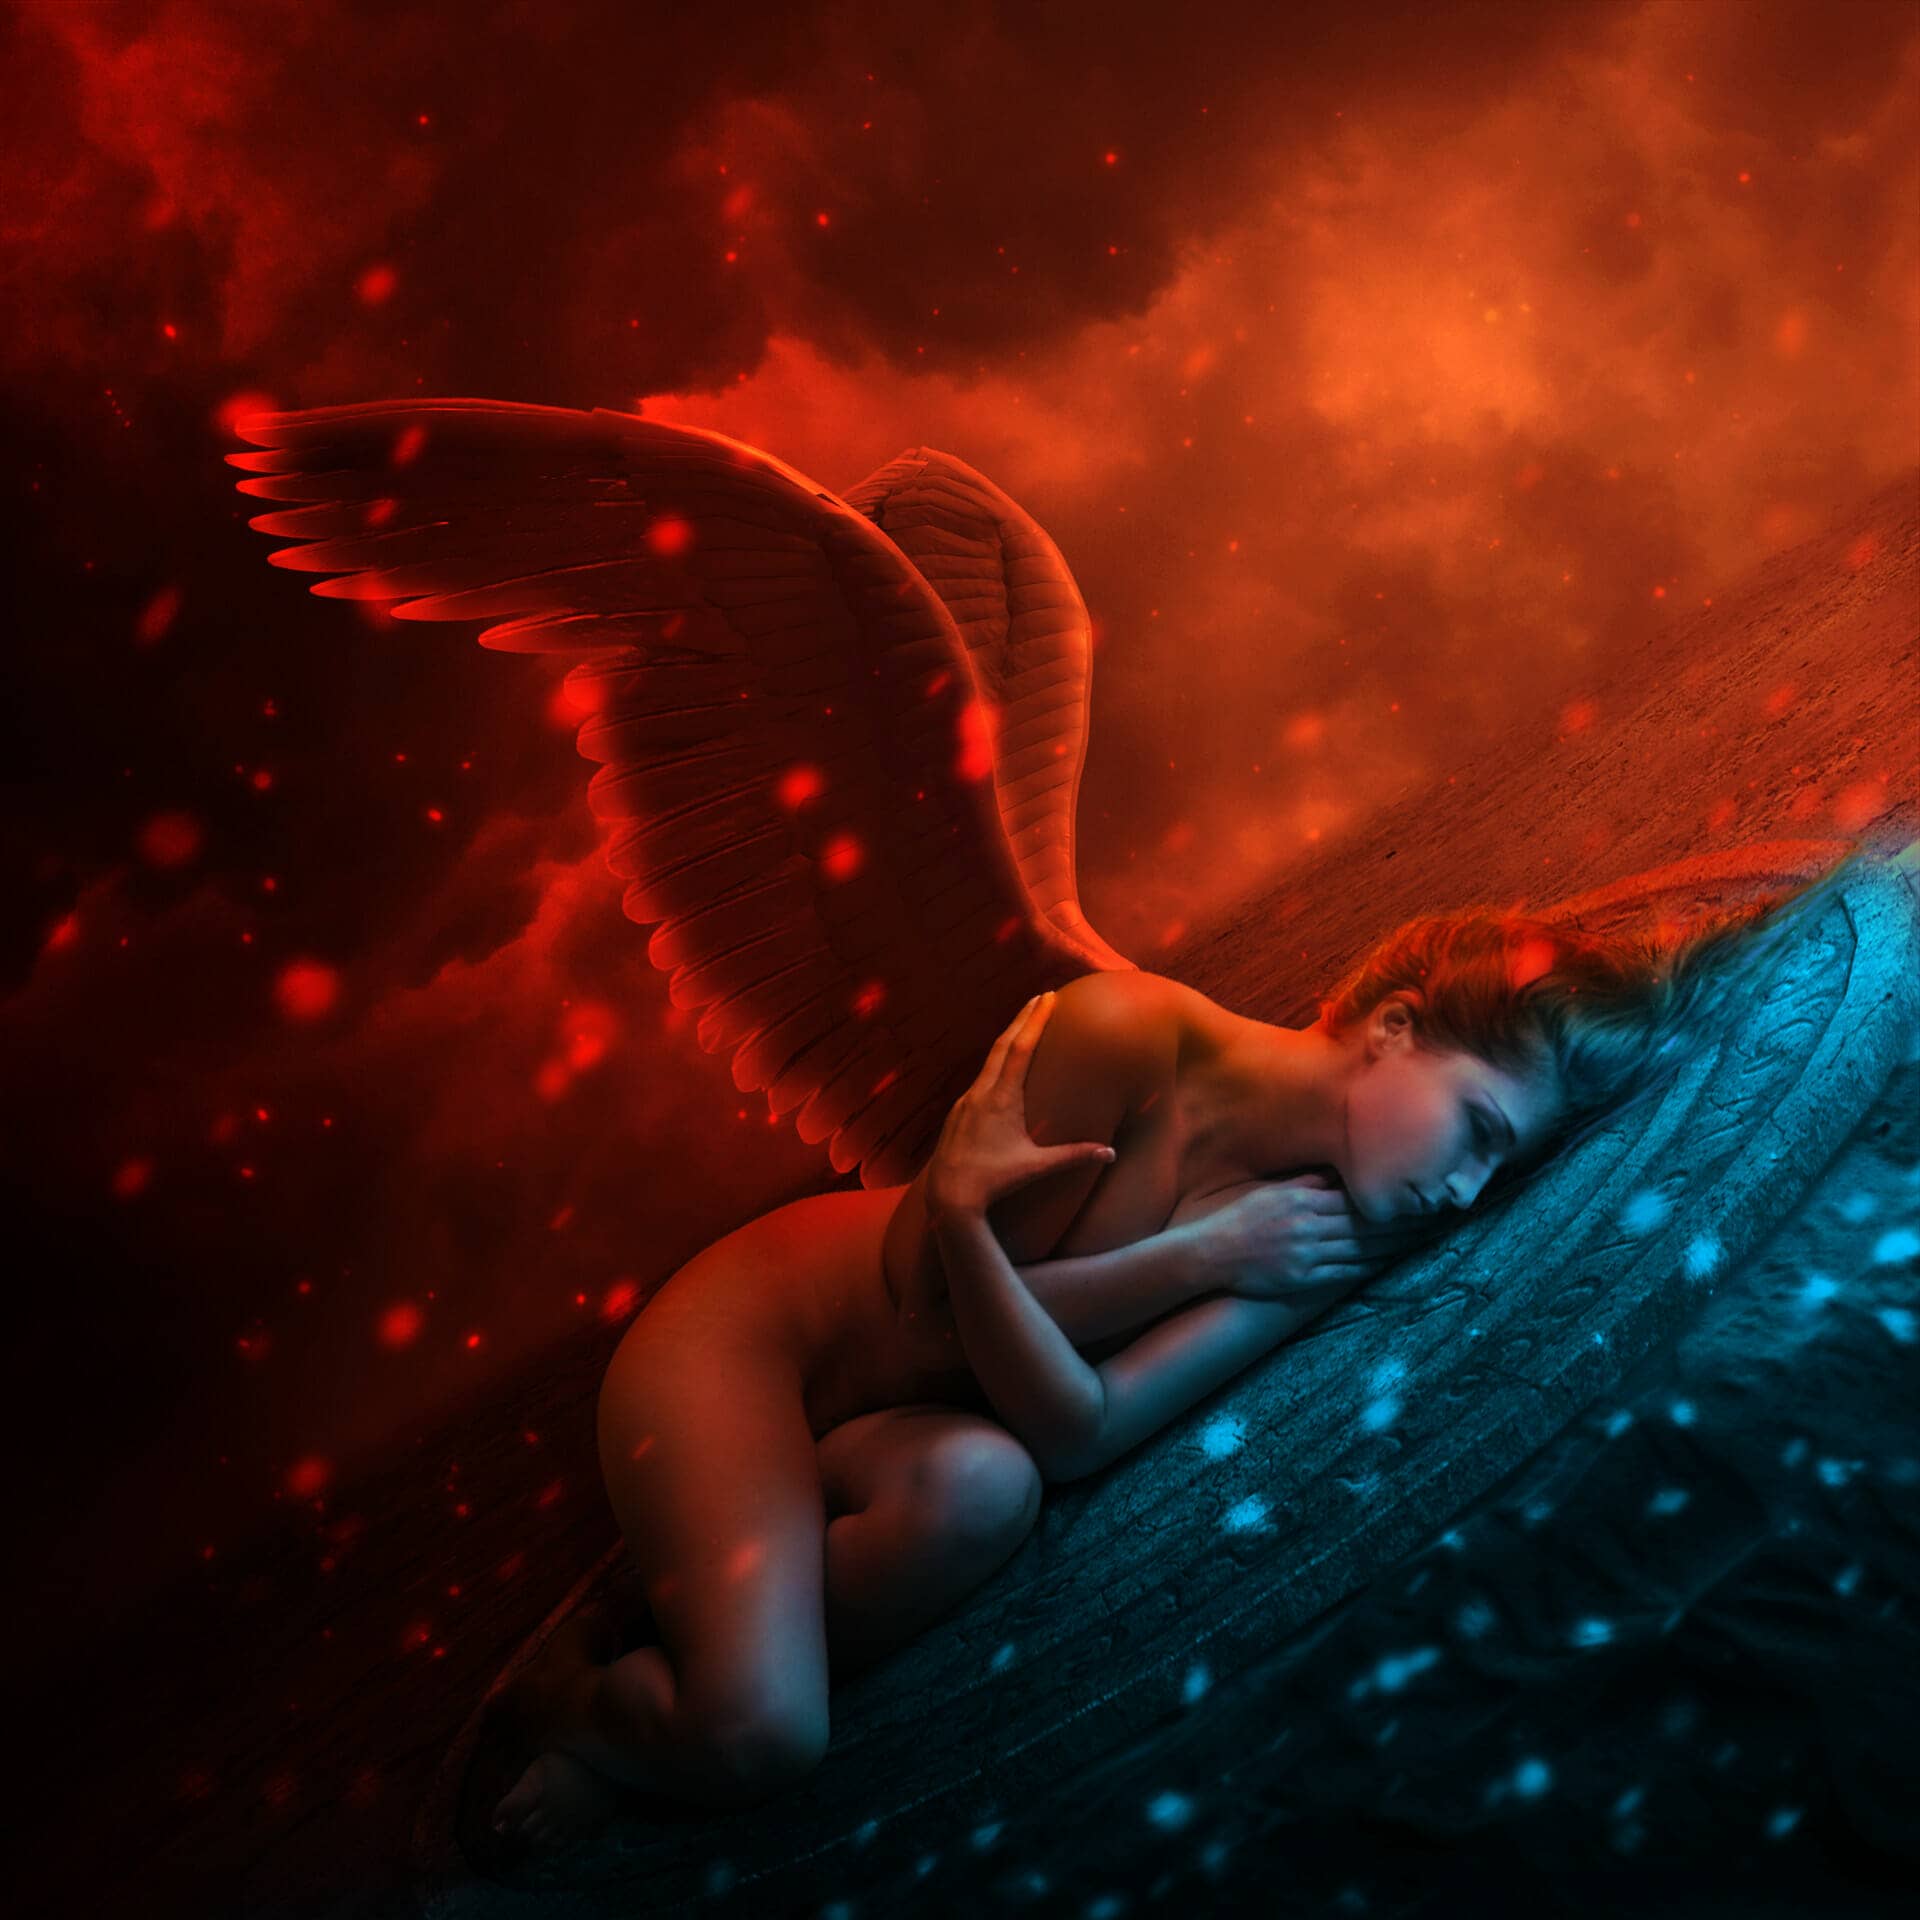 Create an Intense Fallen Angel Composition in Photoshop